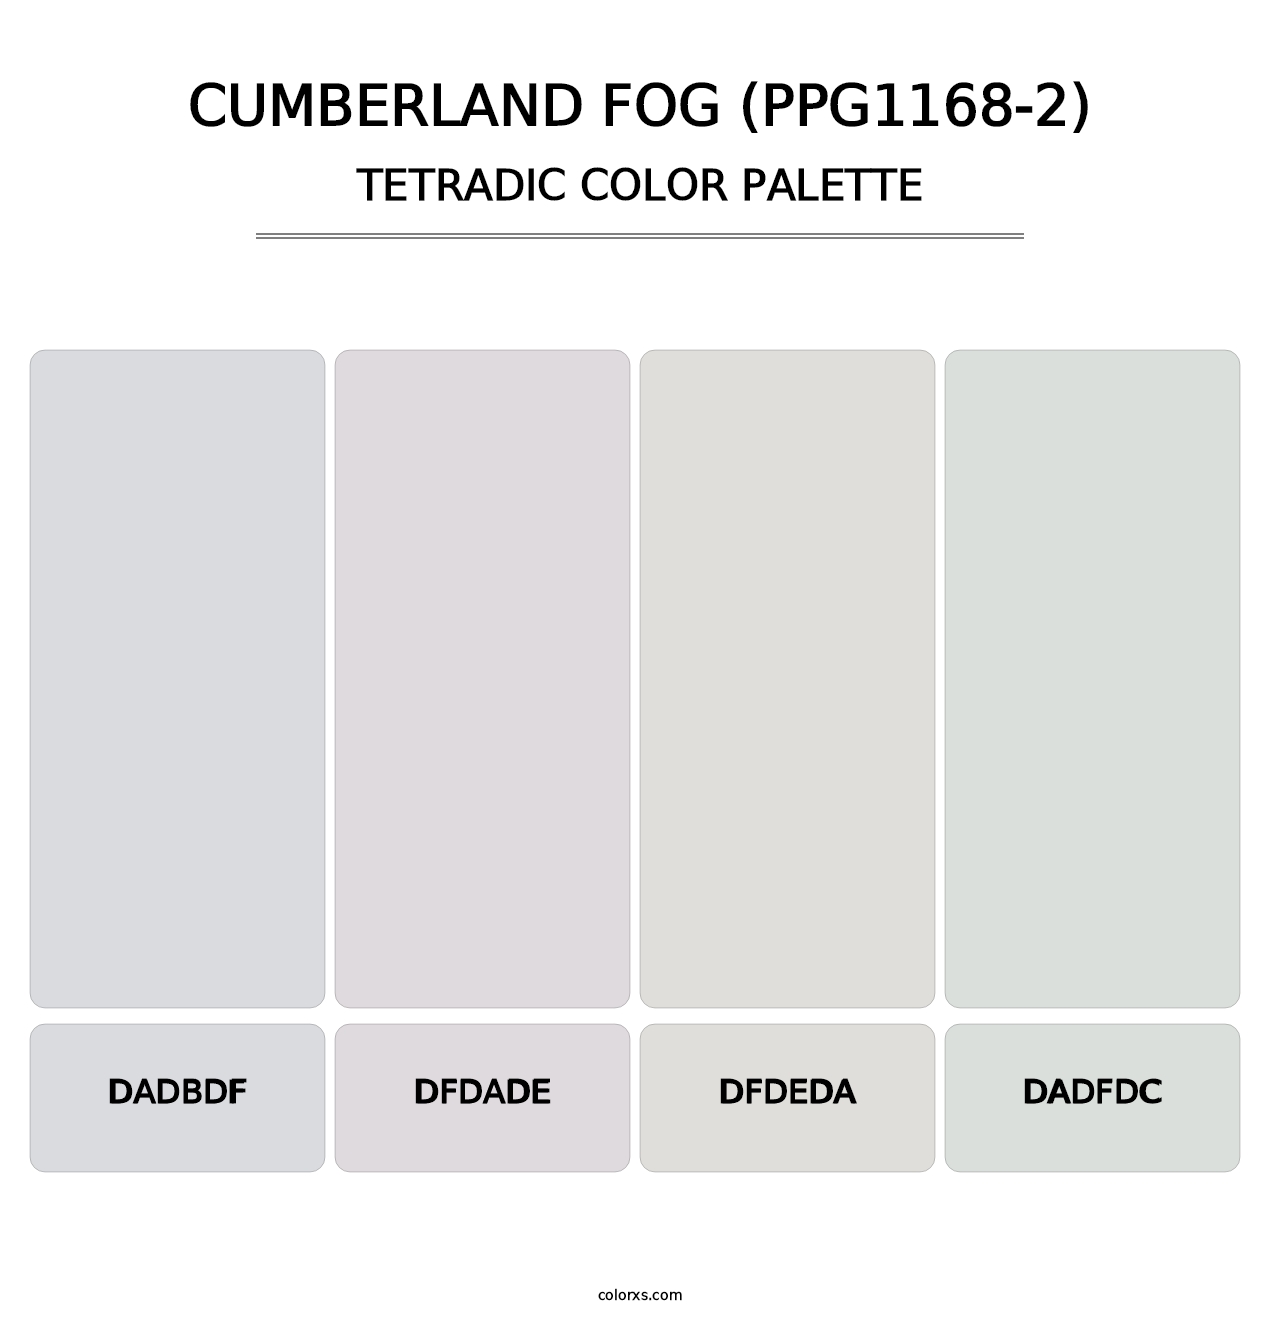 Cumberland Fog (PPG1168-2) - Tetradic Color Palette